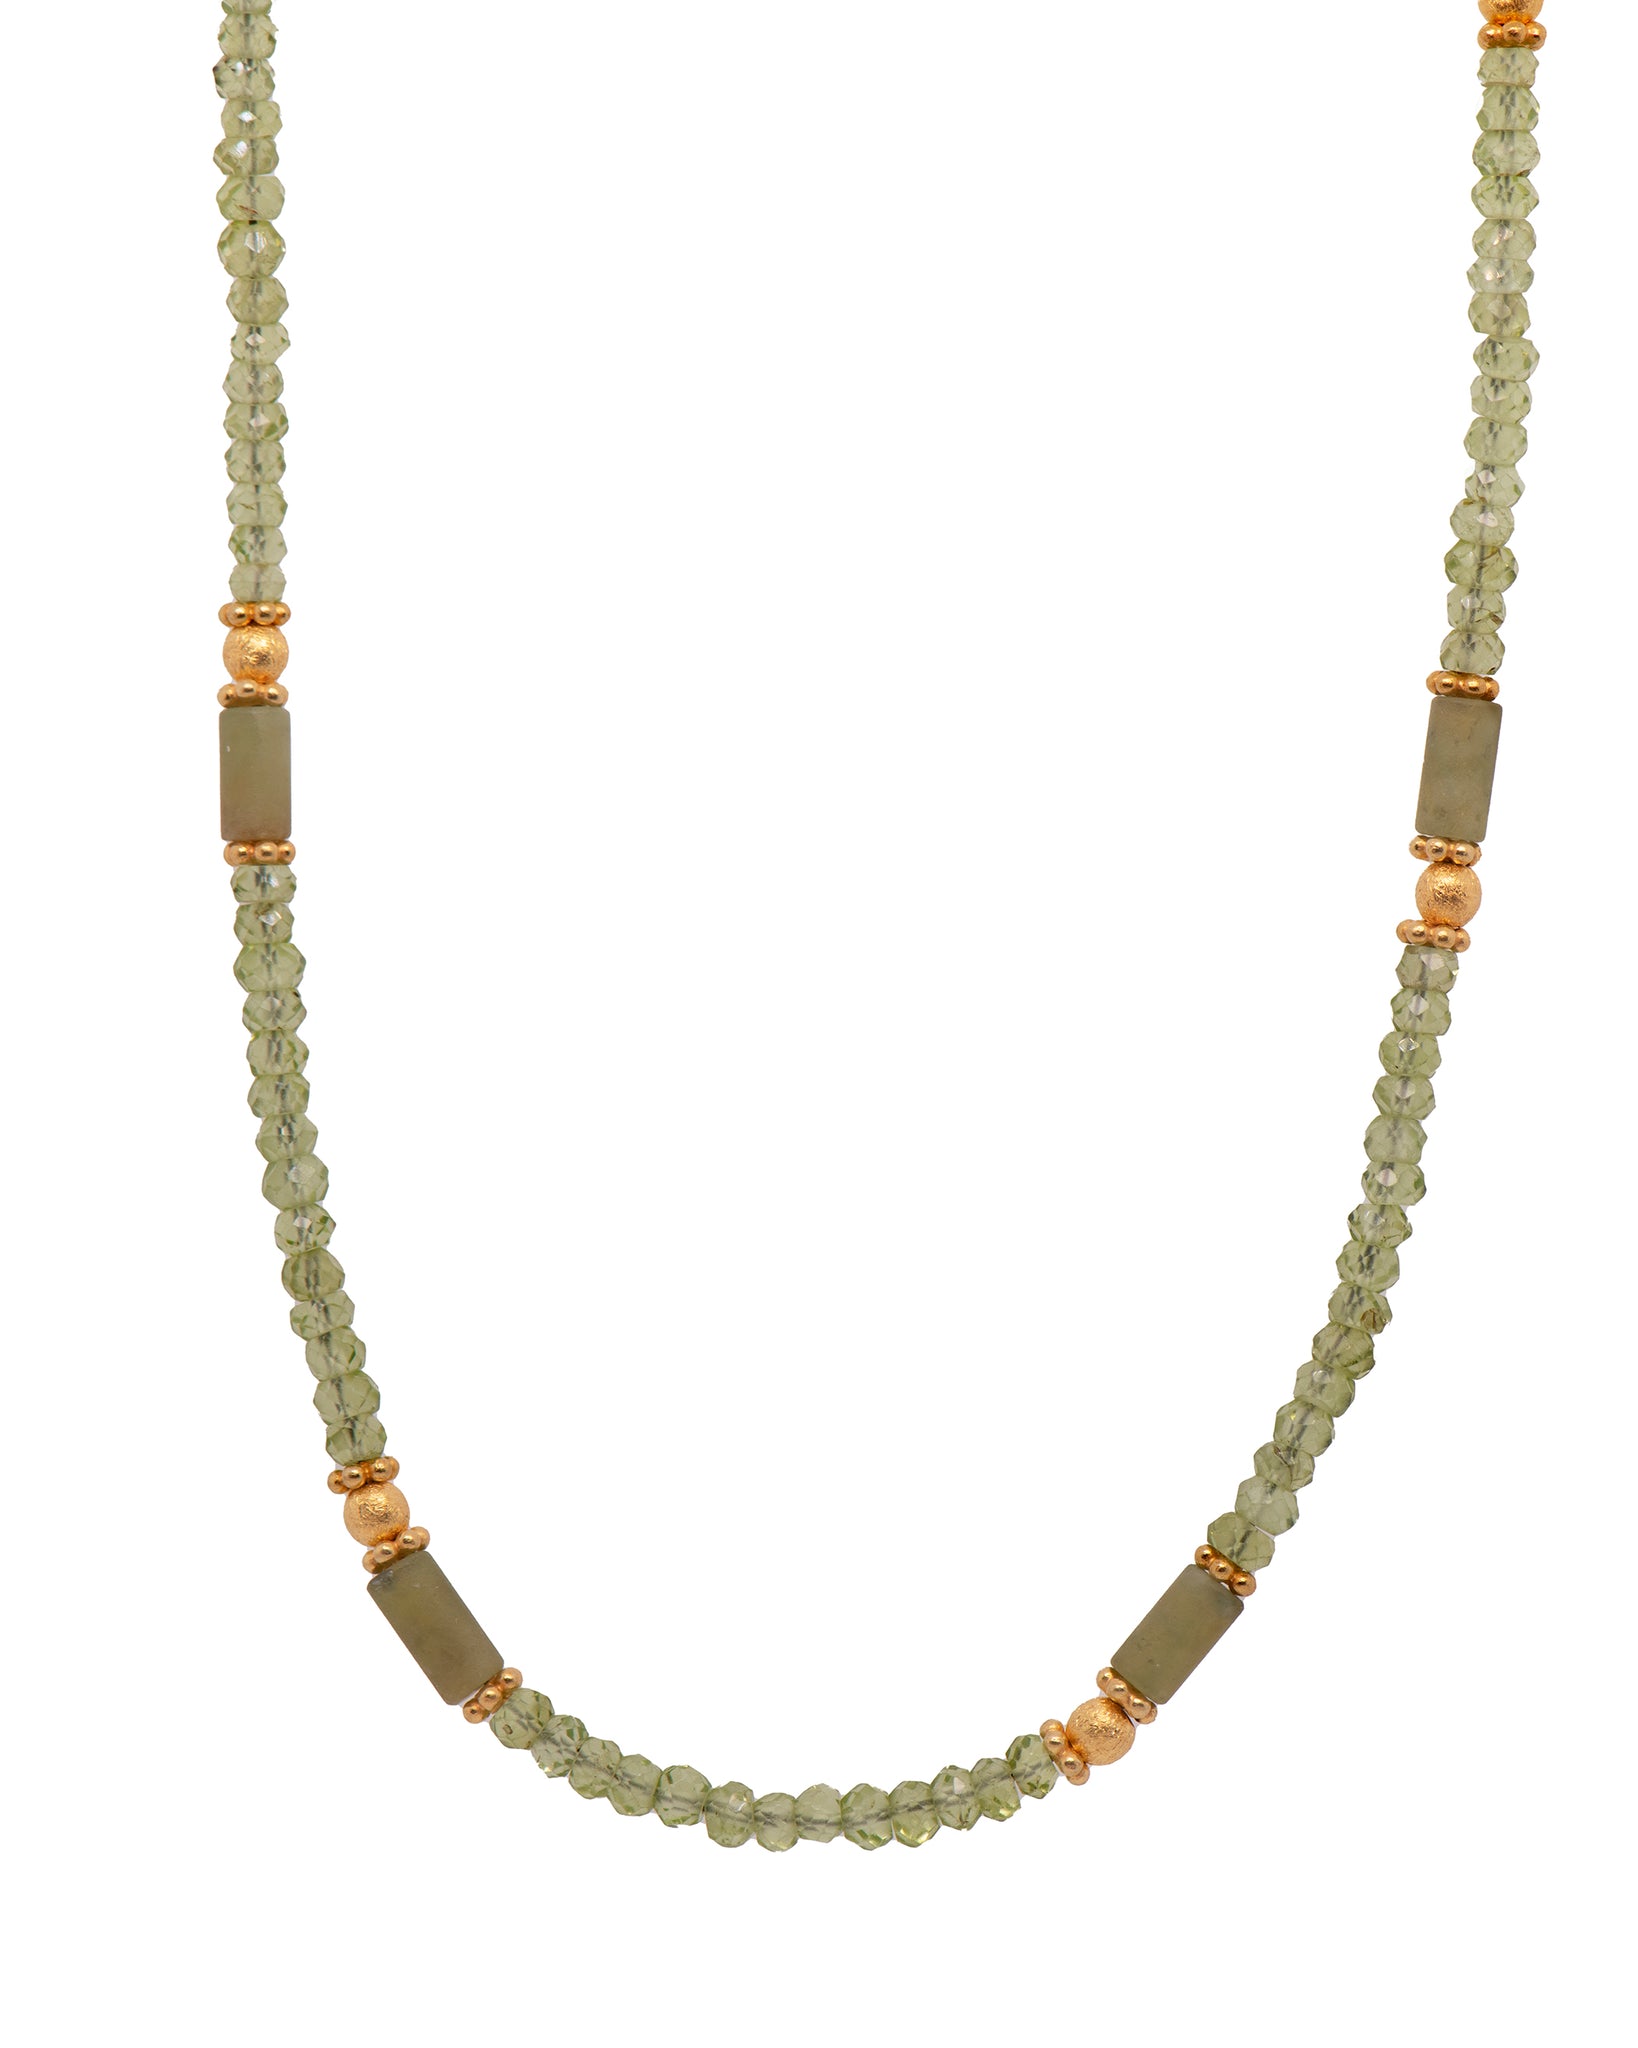 Peridot and Vesuvian Necklace 24K Fair Trade Gold Vermeil